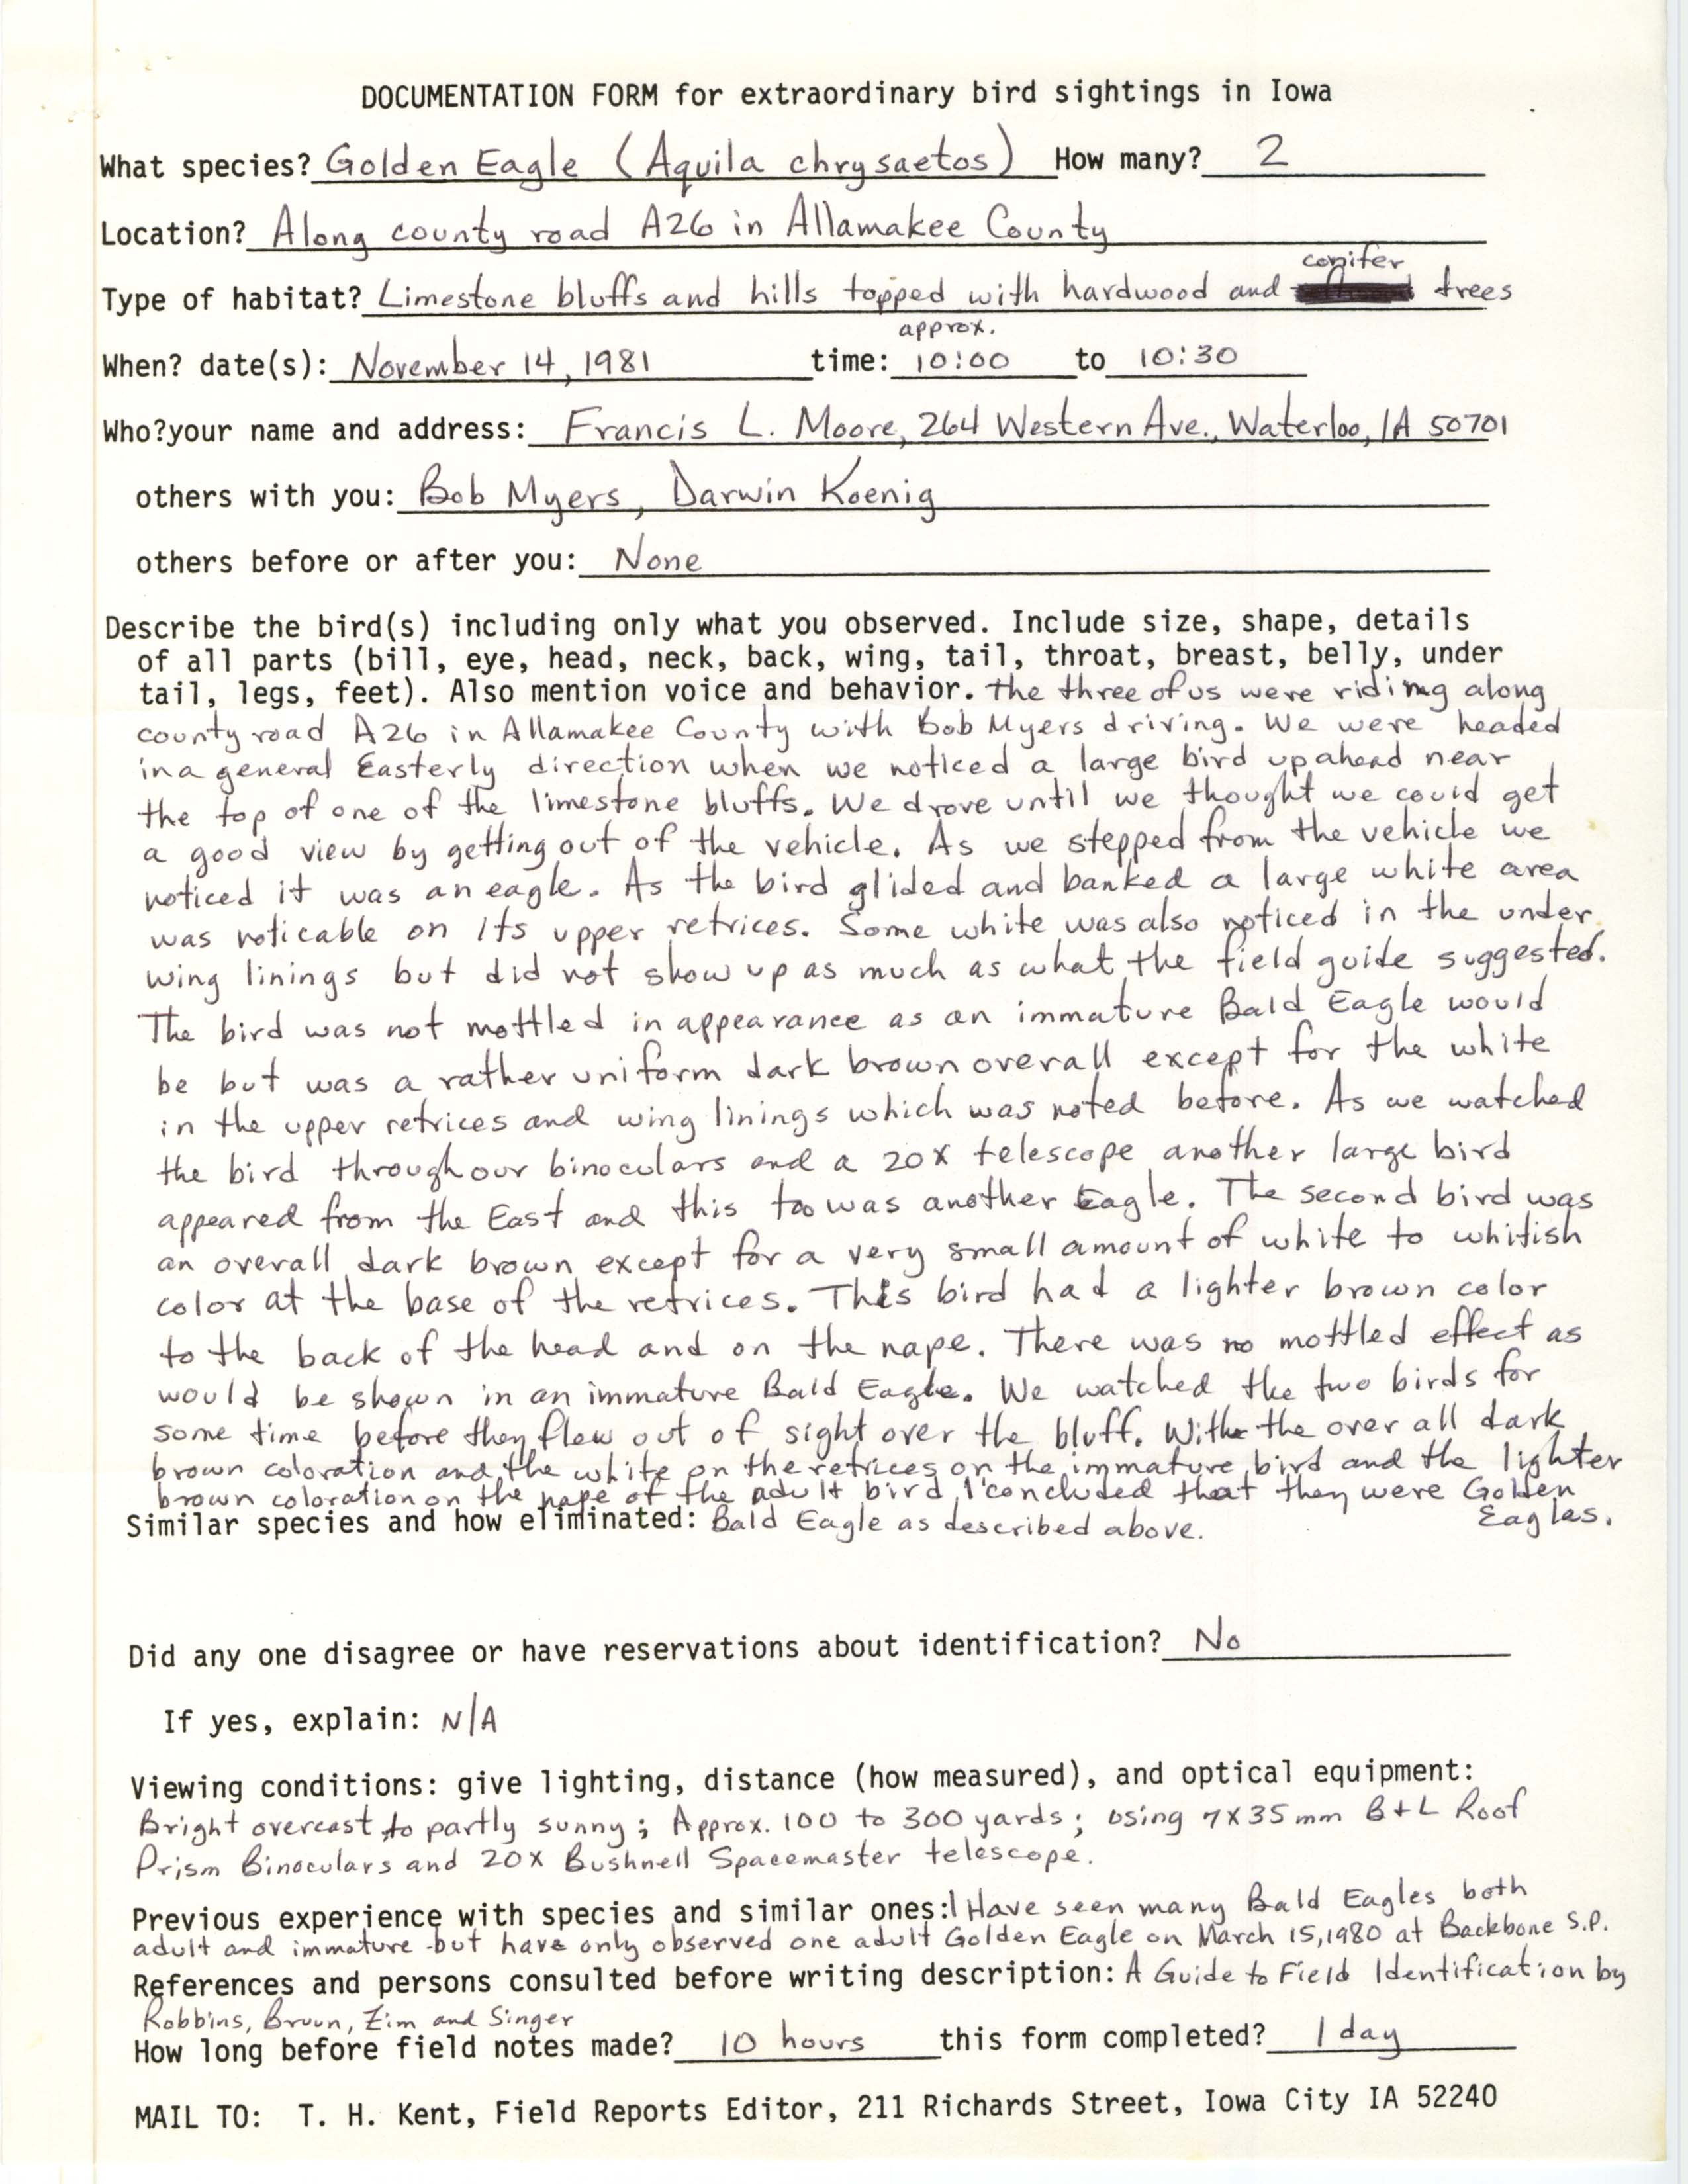 Rare bird documentation form for Golden Eagle at Allamakee County, 1981